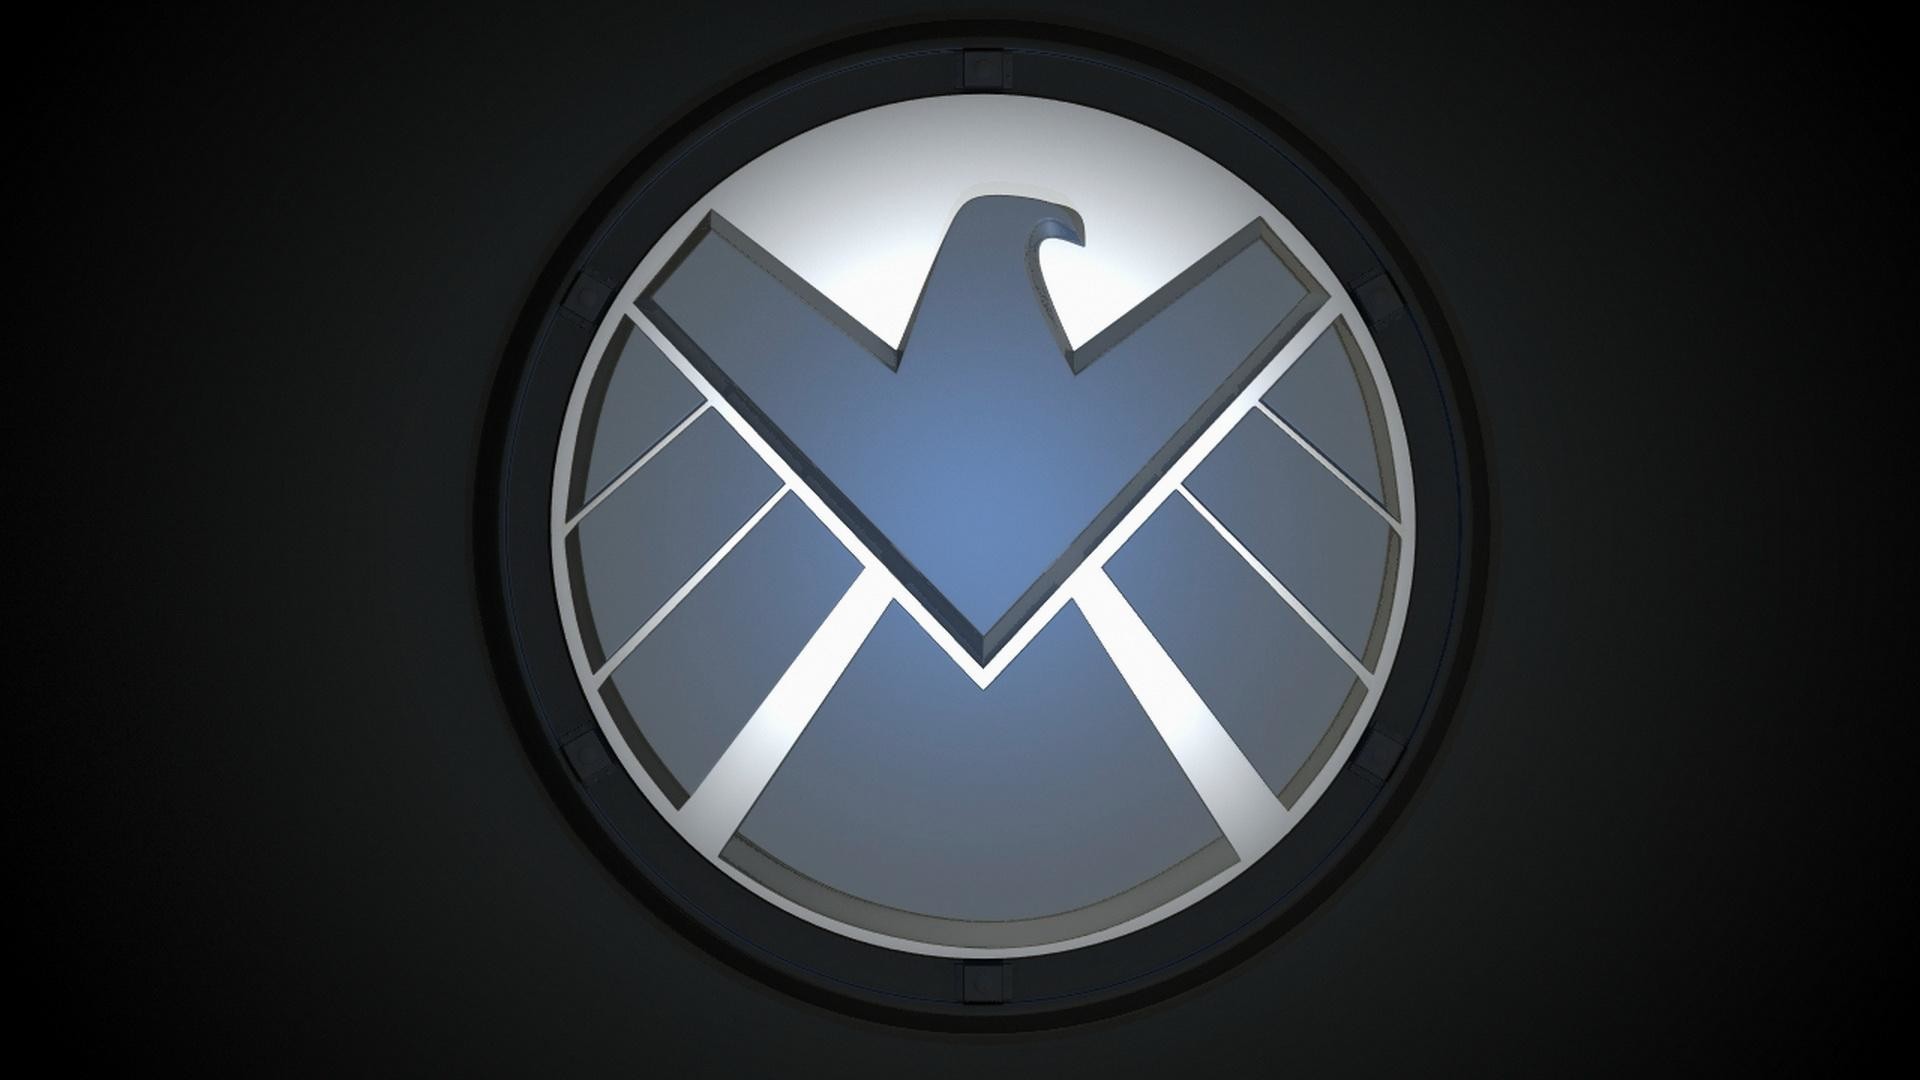 the shield wallpaper,logo,trademark,vehicle,car,emblem